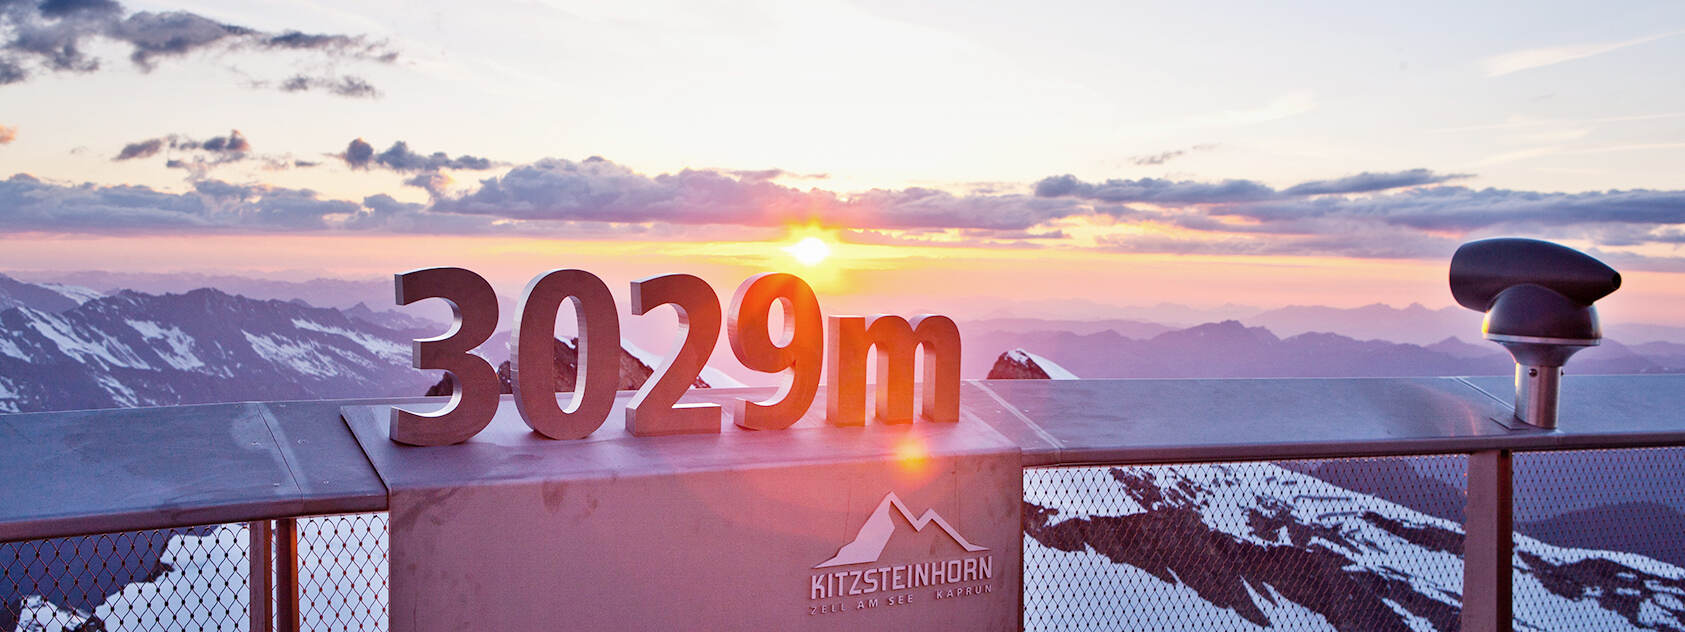 Kitzsteinhorn - Top of Salzburg 3029m © Gletscherbahnen Kaprun